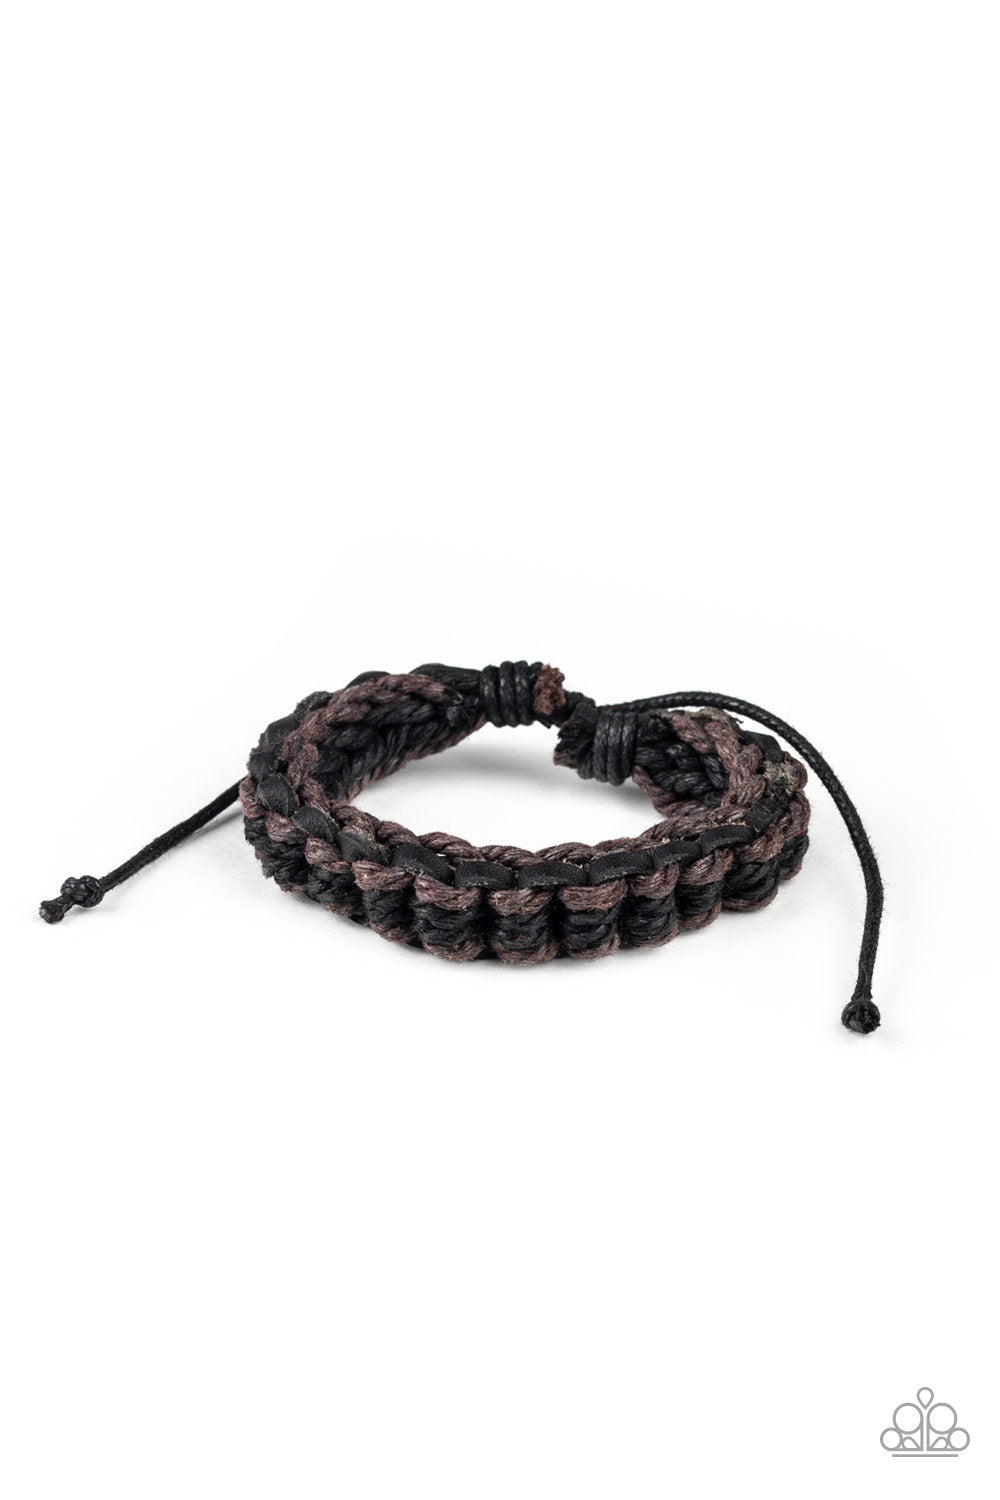 WEAVE It To Me Black Urban Bracelet - Paparazzi Accessories